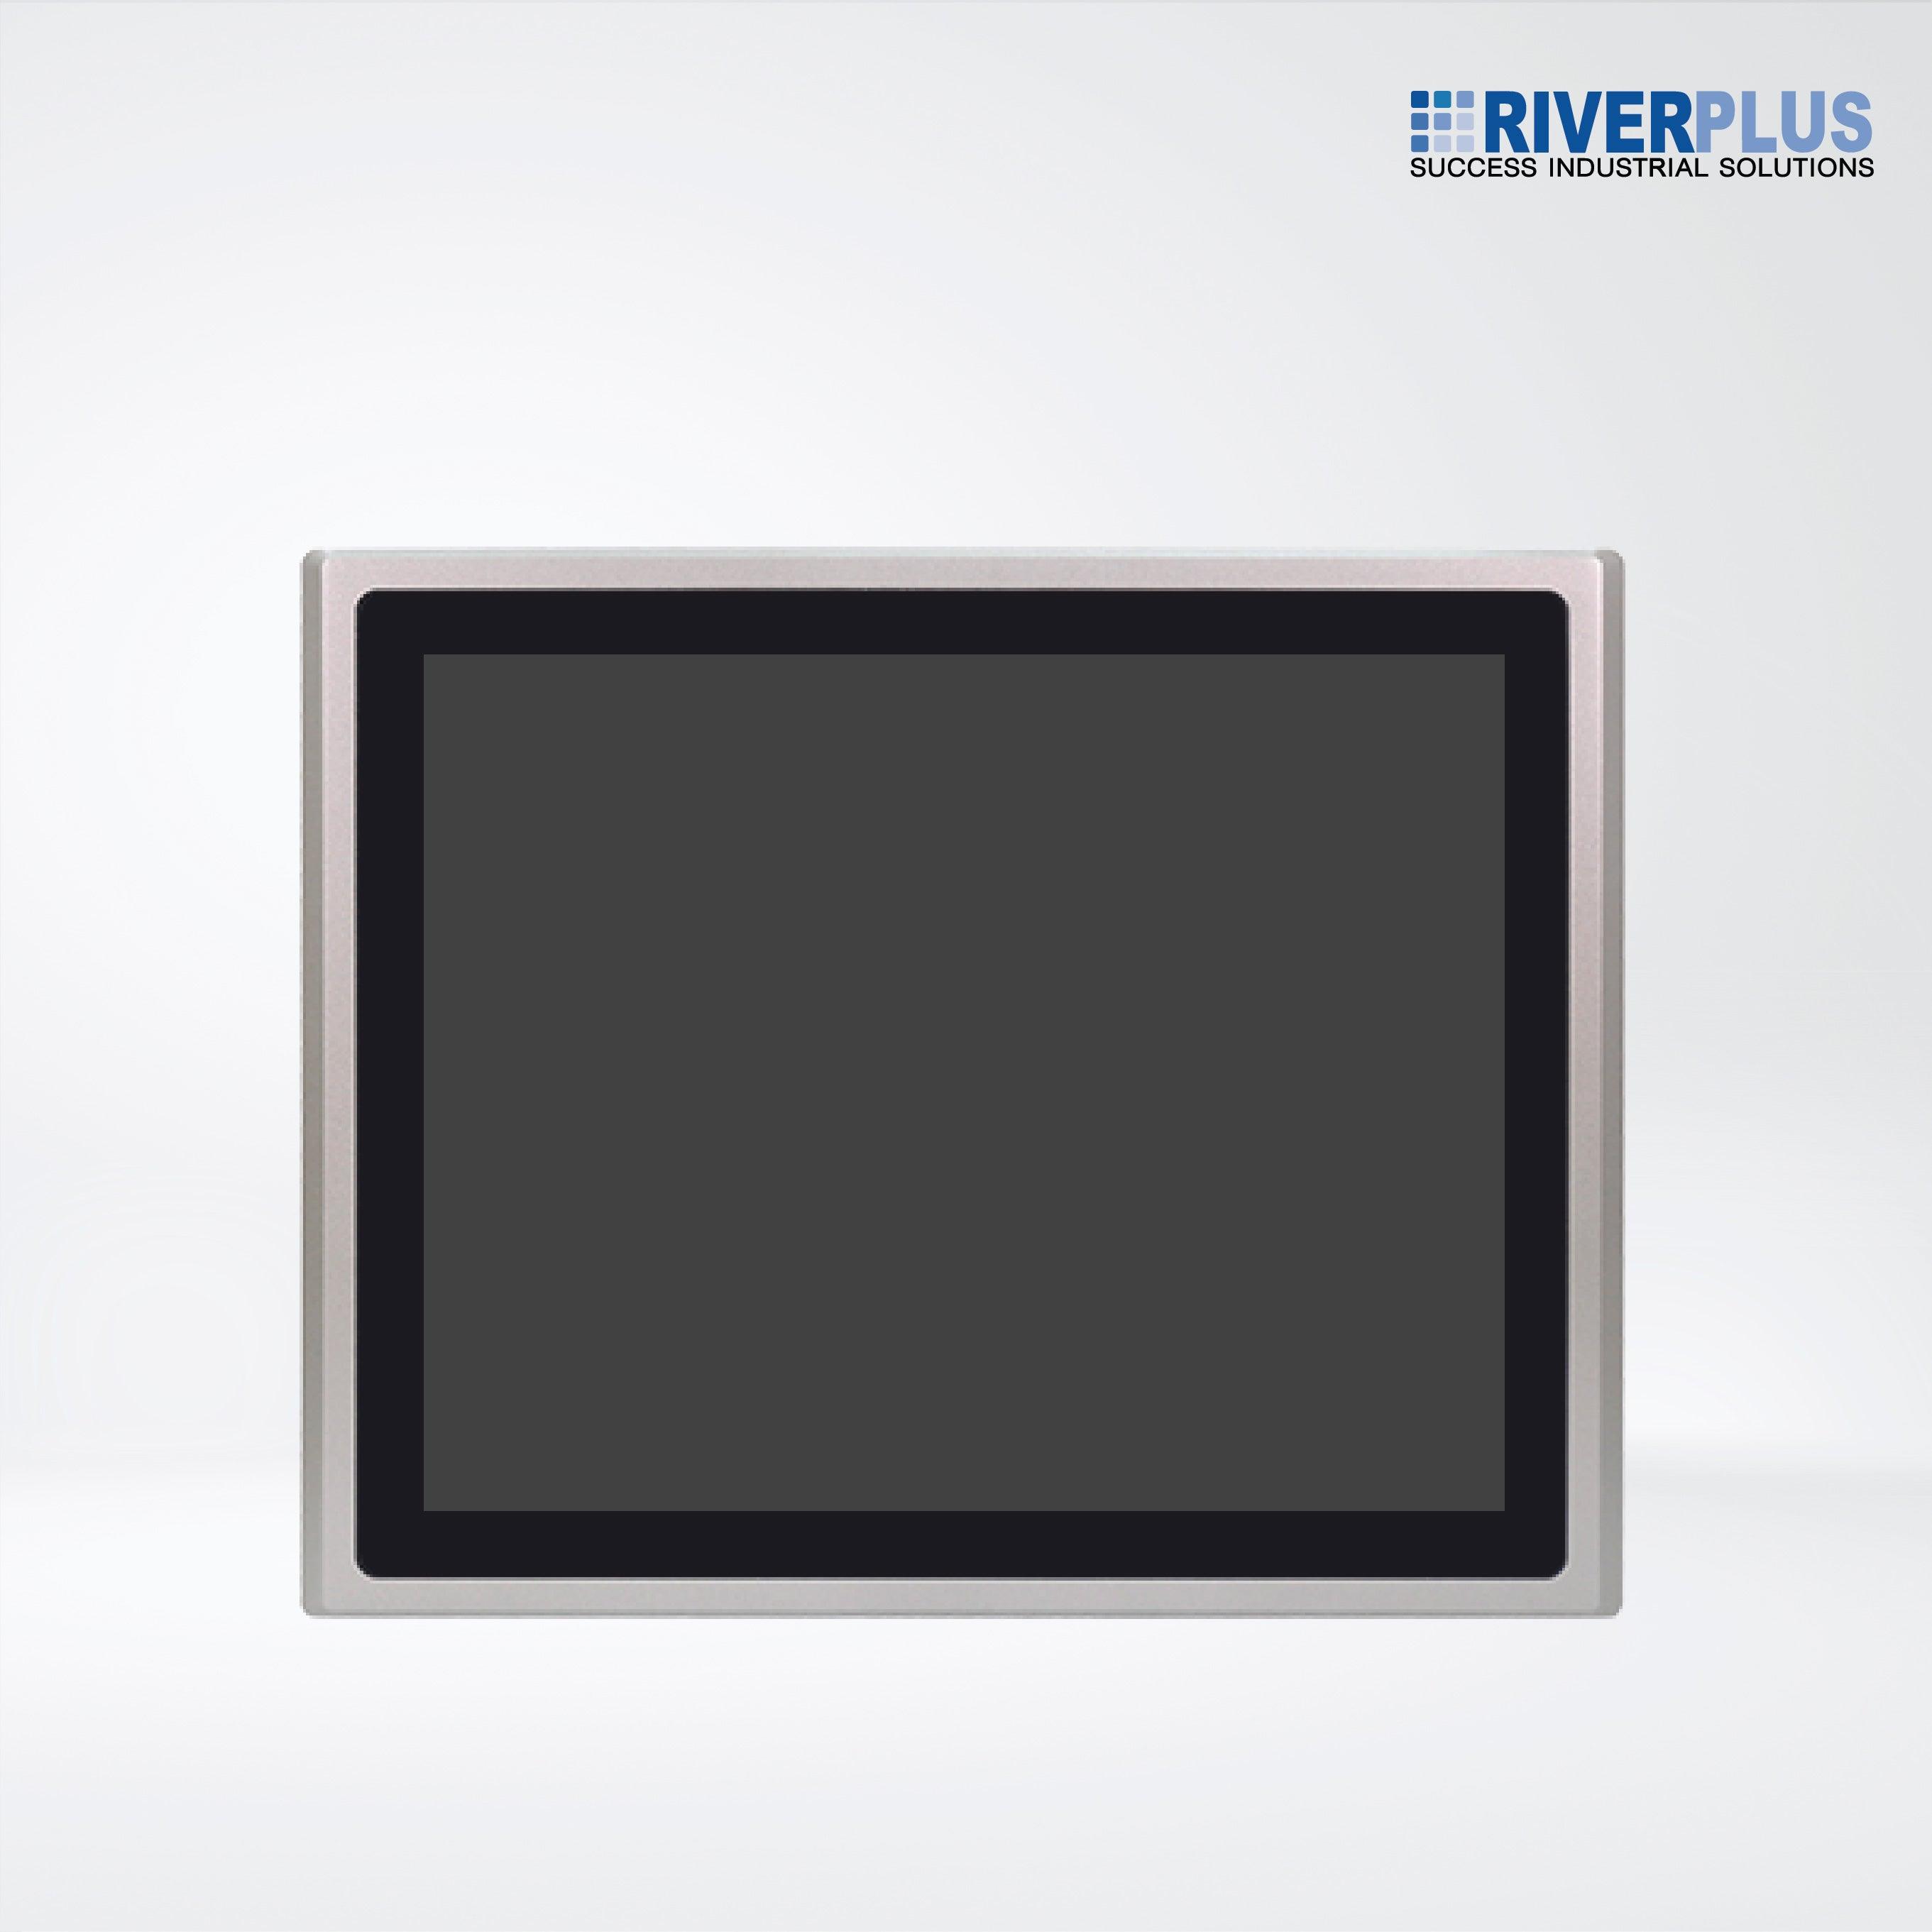 ARCHMI-819AR 19" Intel Apollo Lake N4200/N3350 Fanless Industrial Compact Size Panel PC - Riverplus